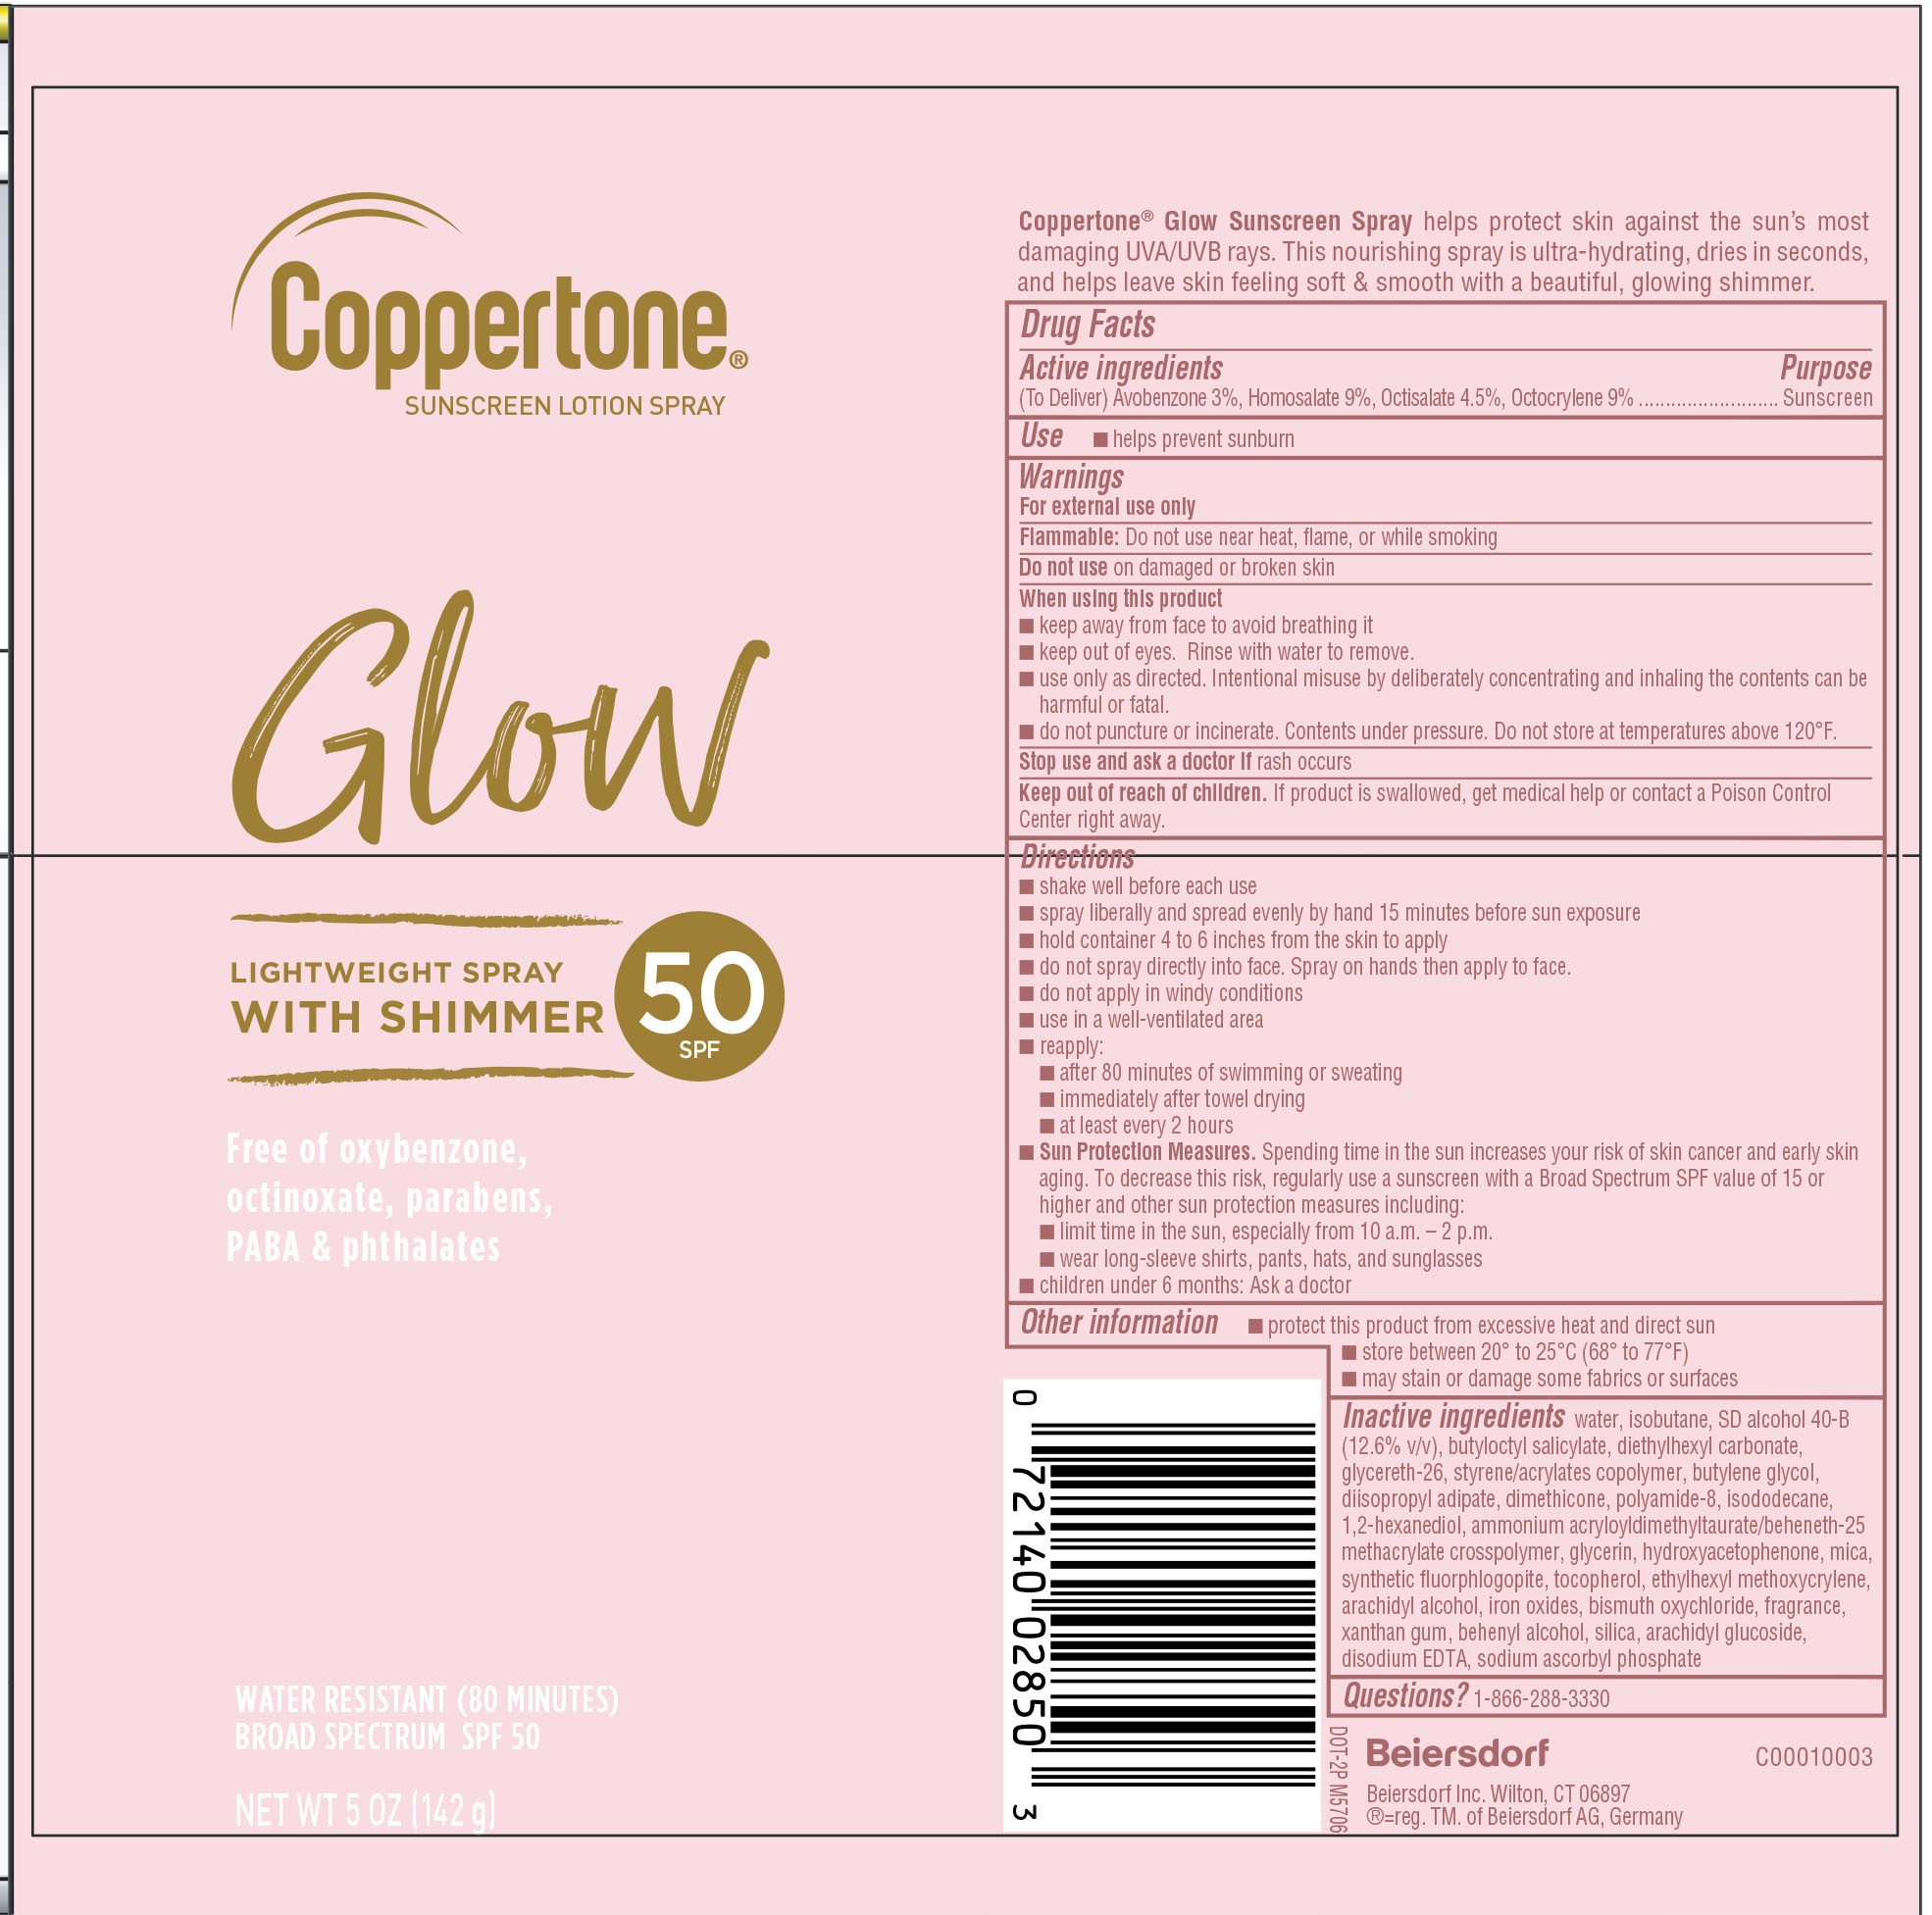 Coppertone Glow Sunscreen Spray